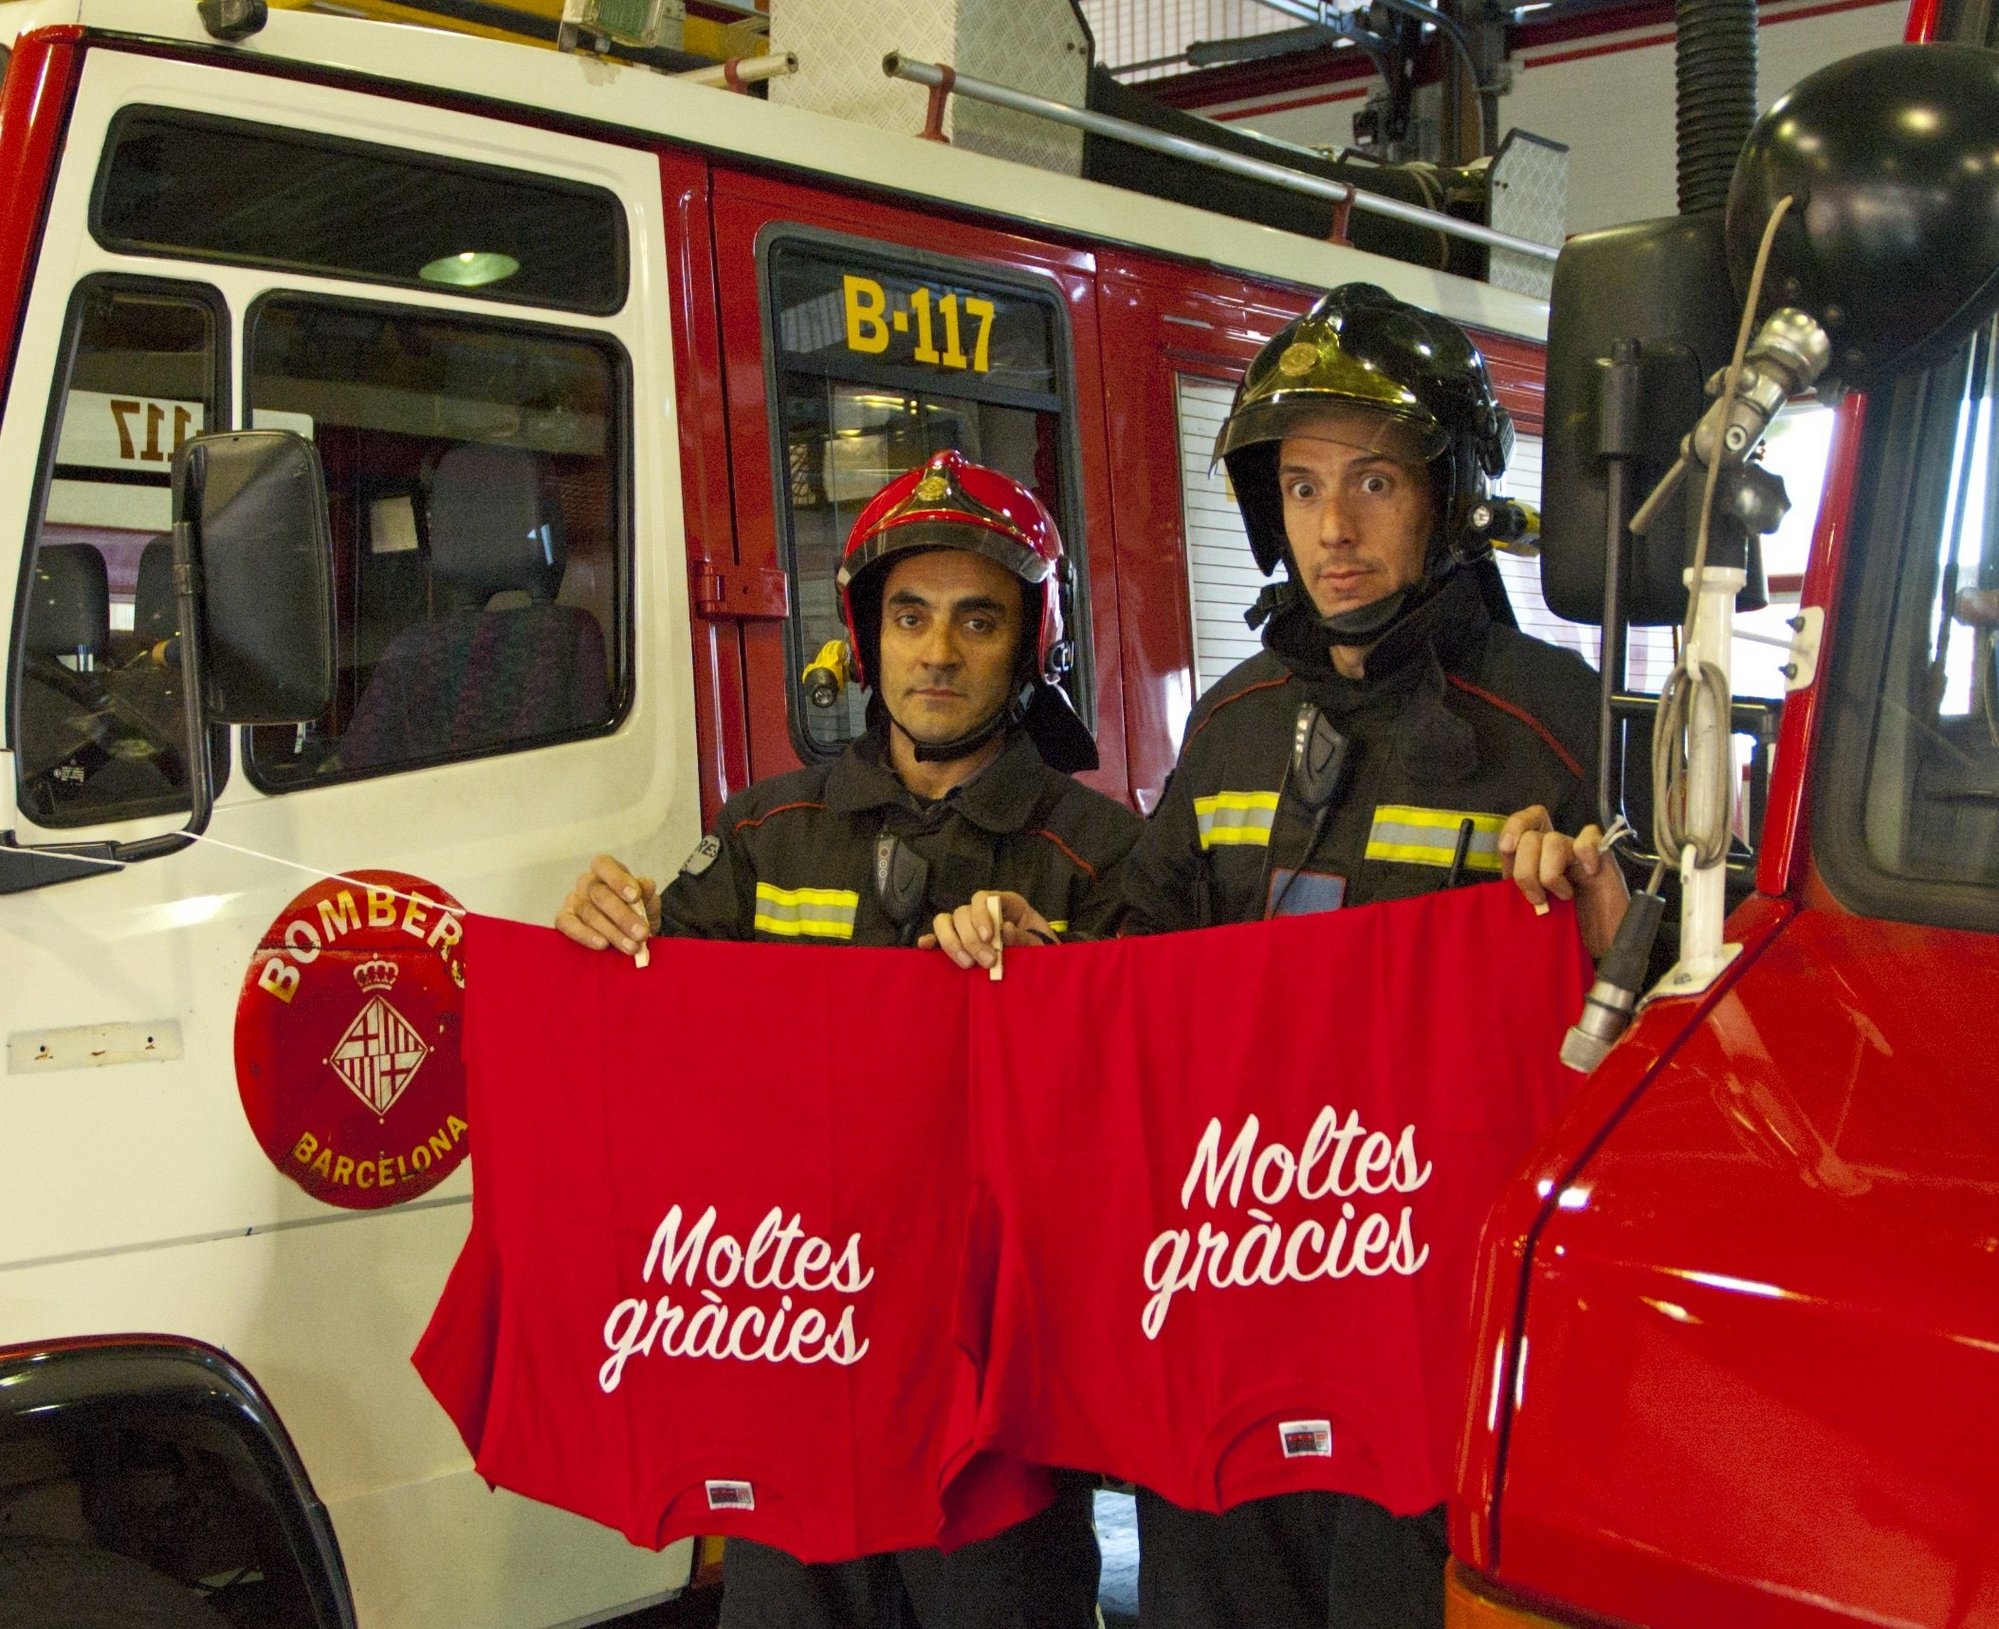 Barcelona celebra este fin de semana su quinta maratón de donación sangre